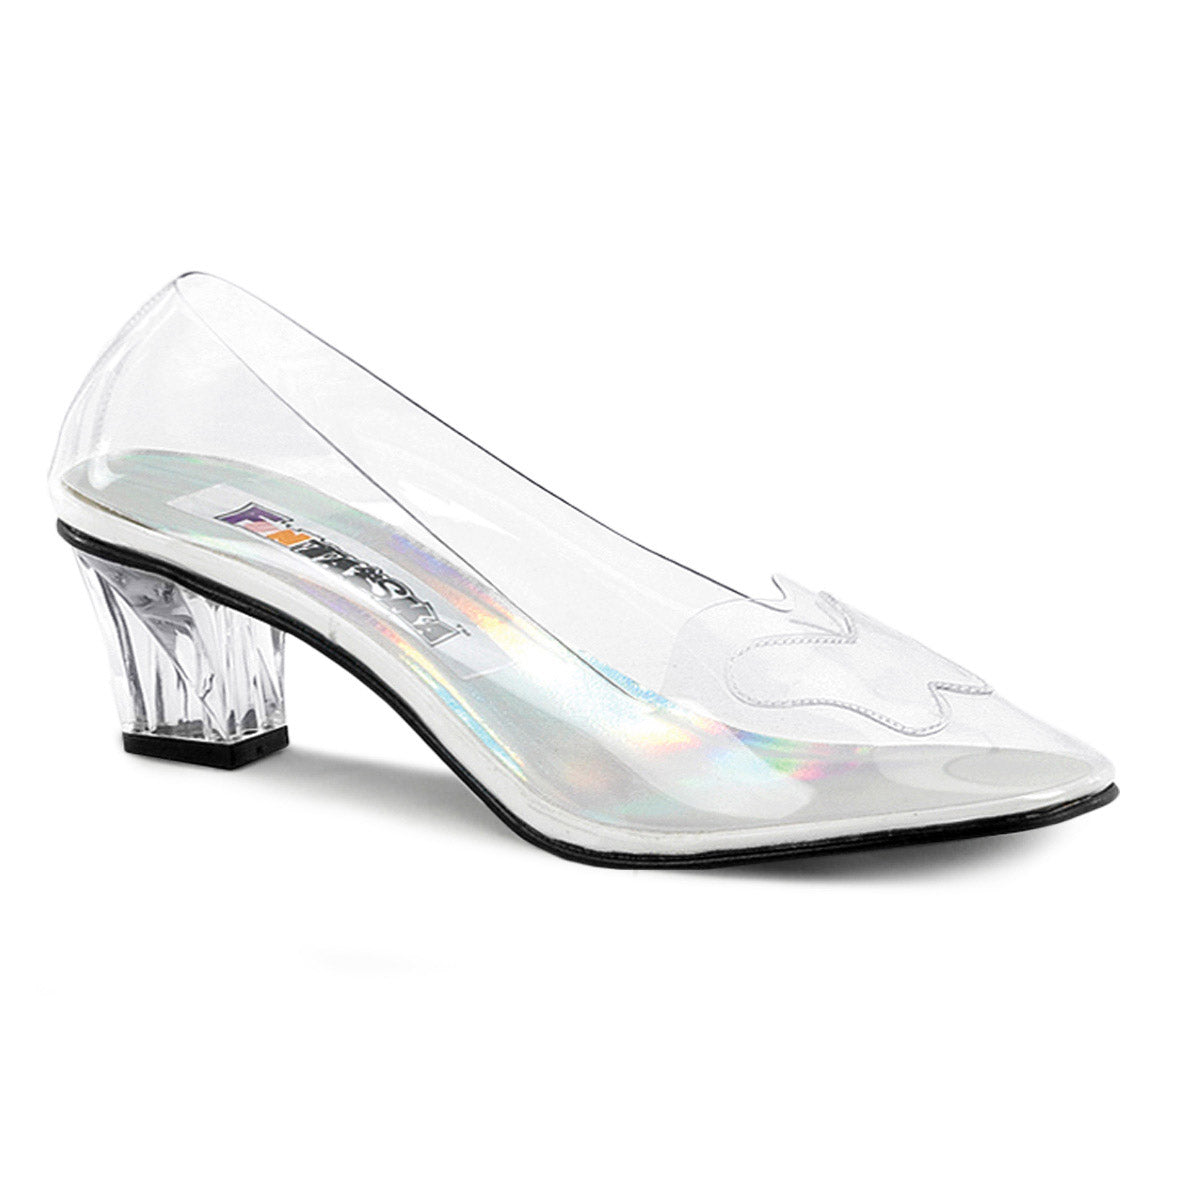 Sexy Butterfly Trim "Glass" Slipper Fantasy Slip On High Heels Shoes Pleaser Funtasma CRYSTAL/103